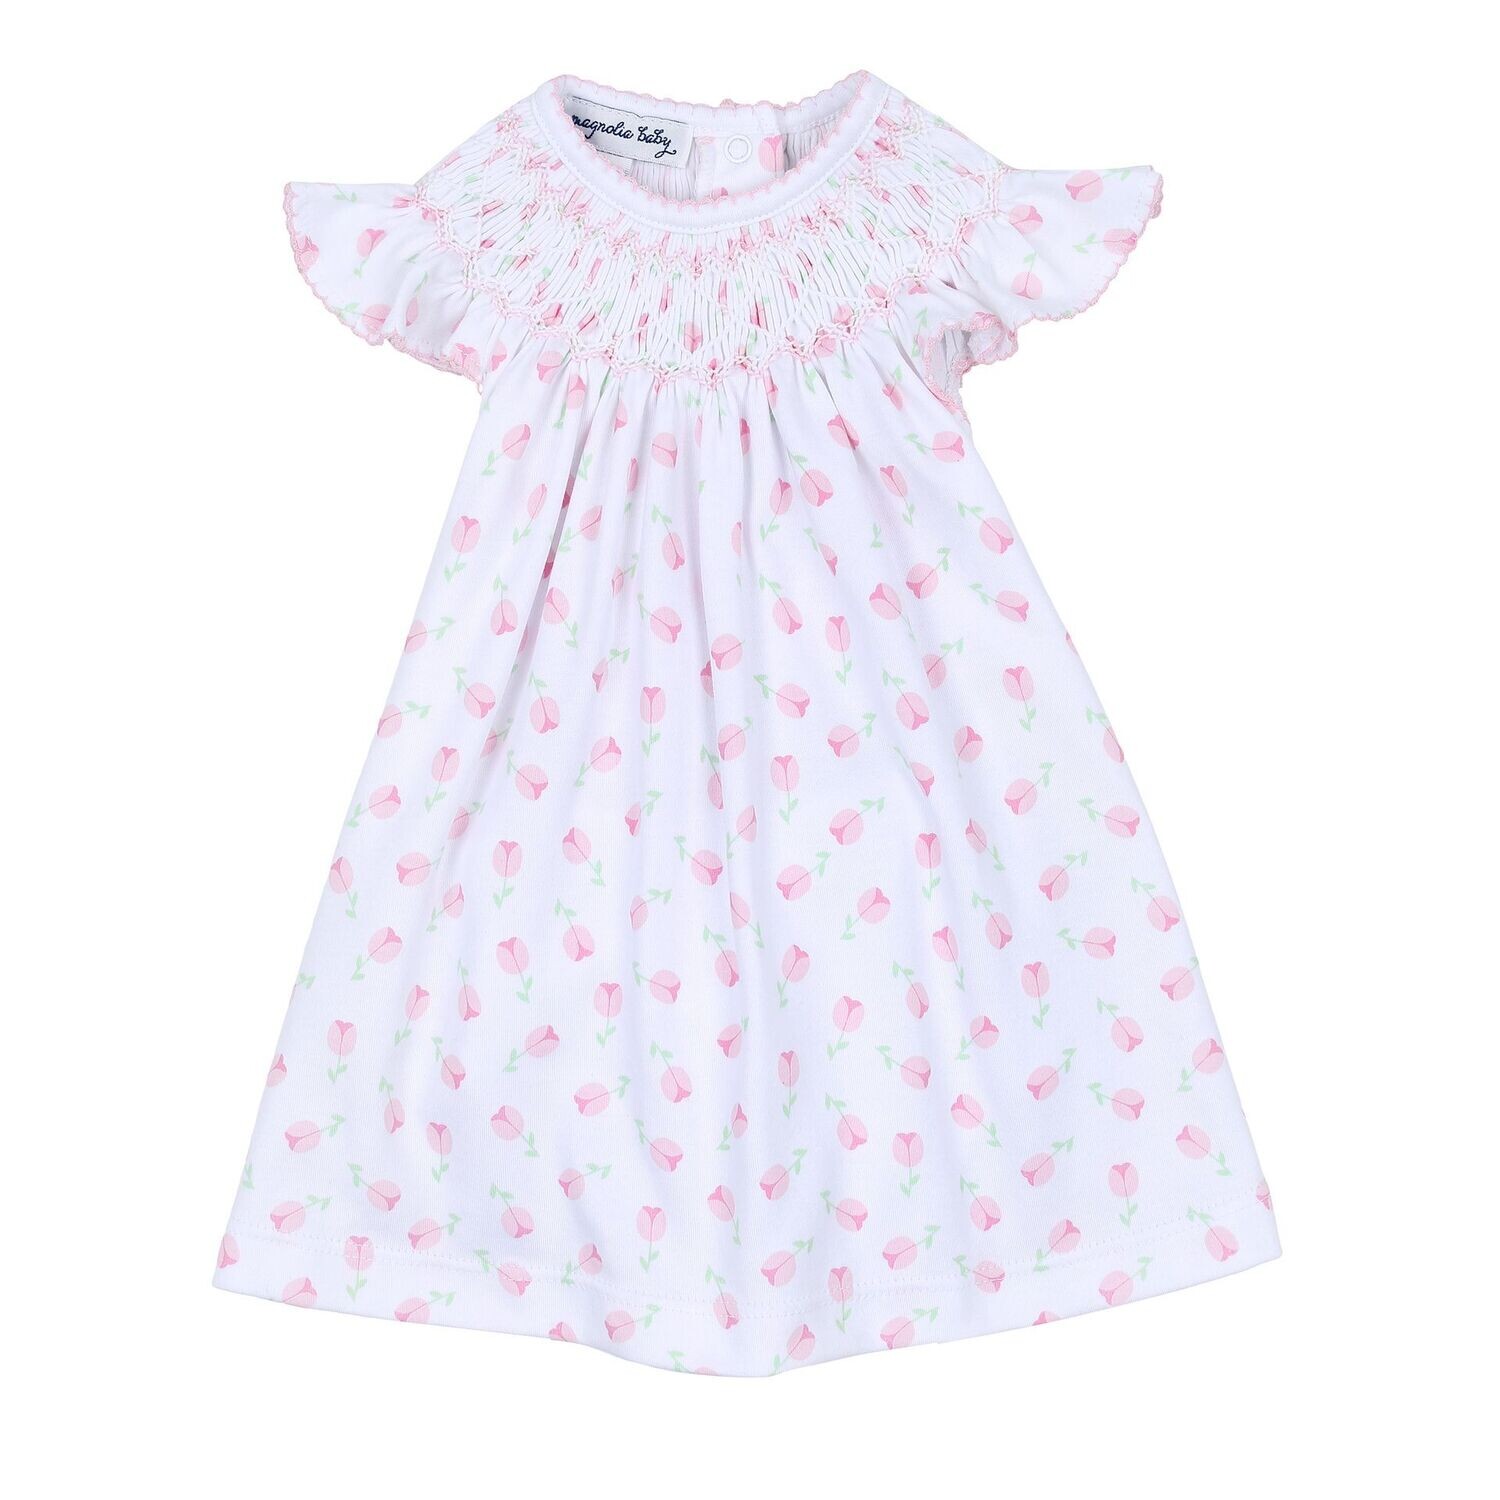 Teresa's Classic Bishop Printed Flutters Toddler Dress, Size: 2T